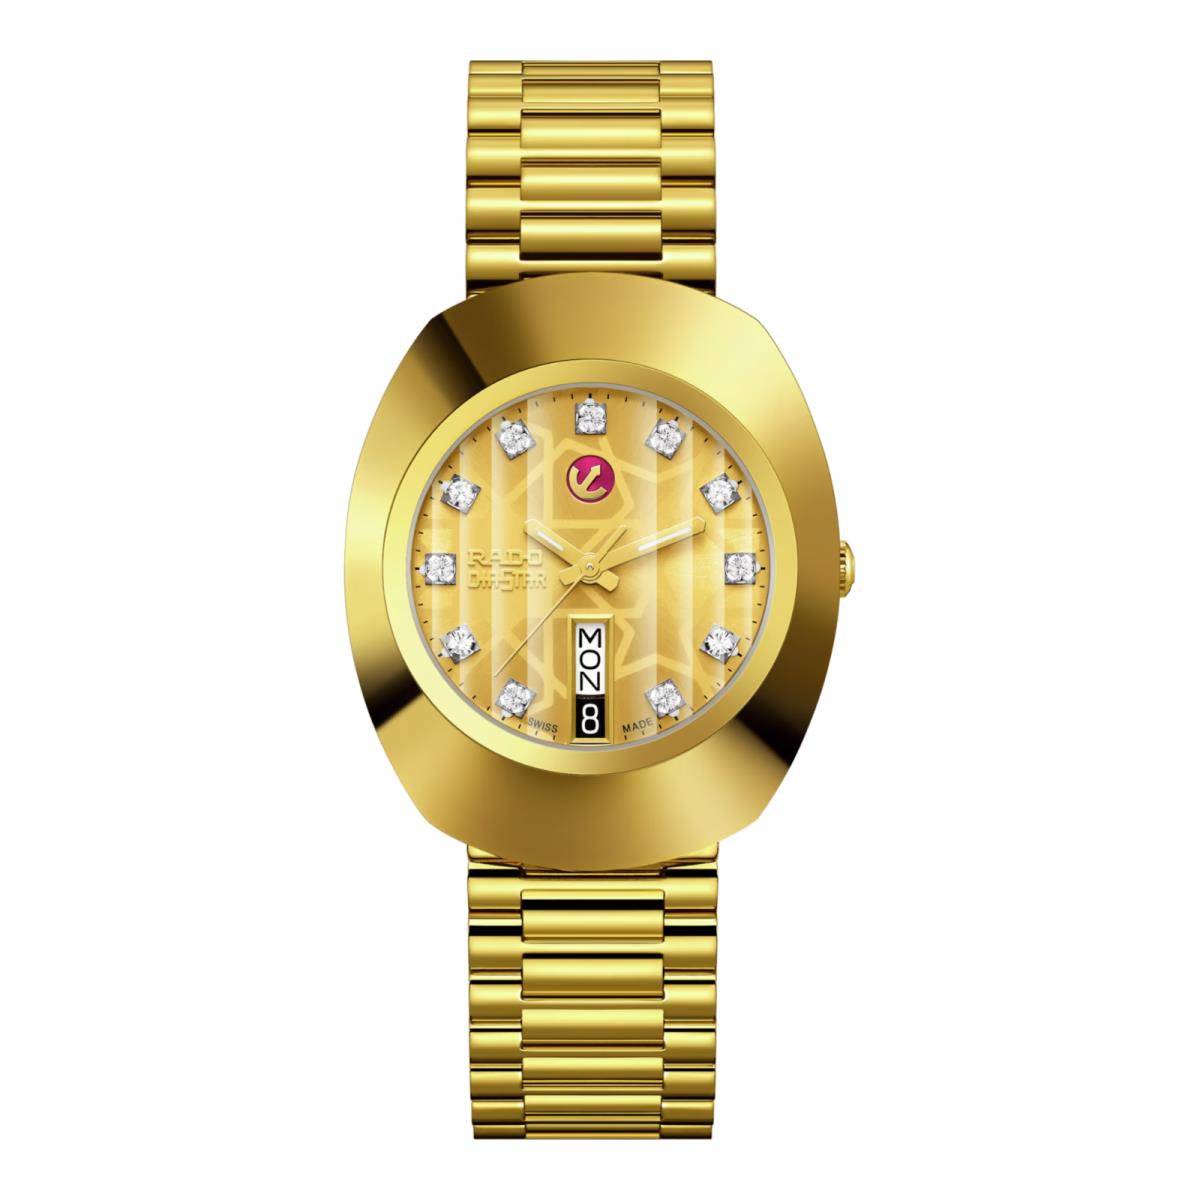 Rado The Automatic 35 mm Gold Watch R12413503